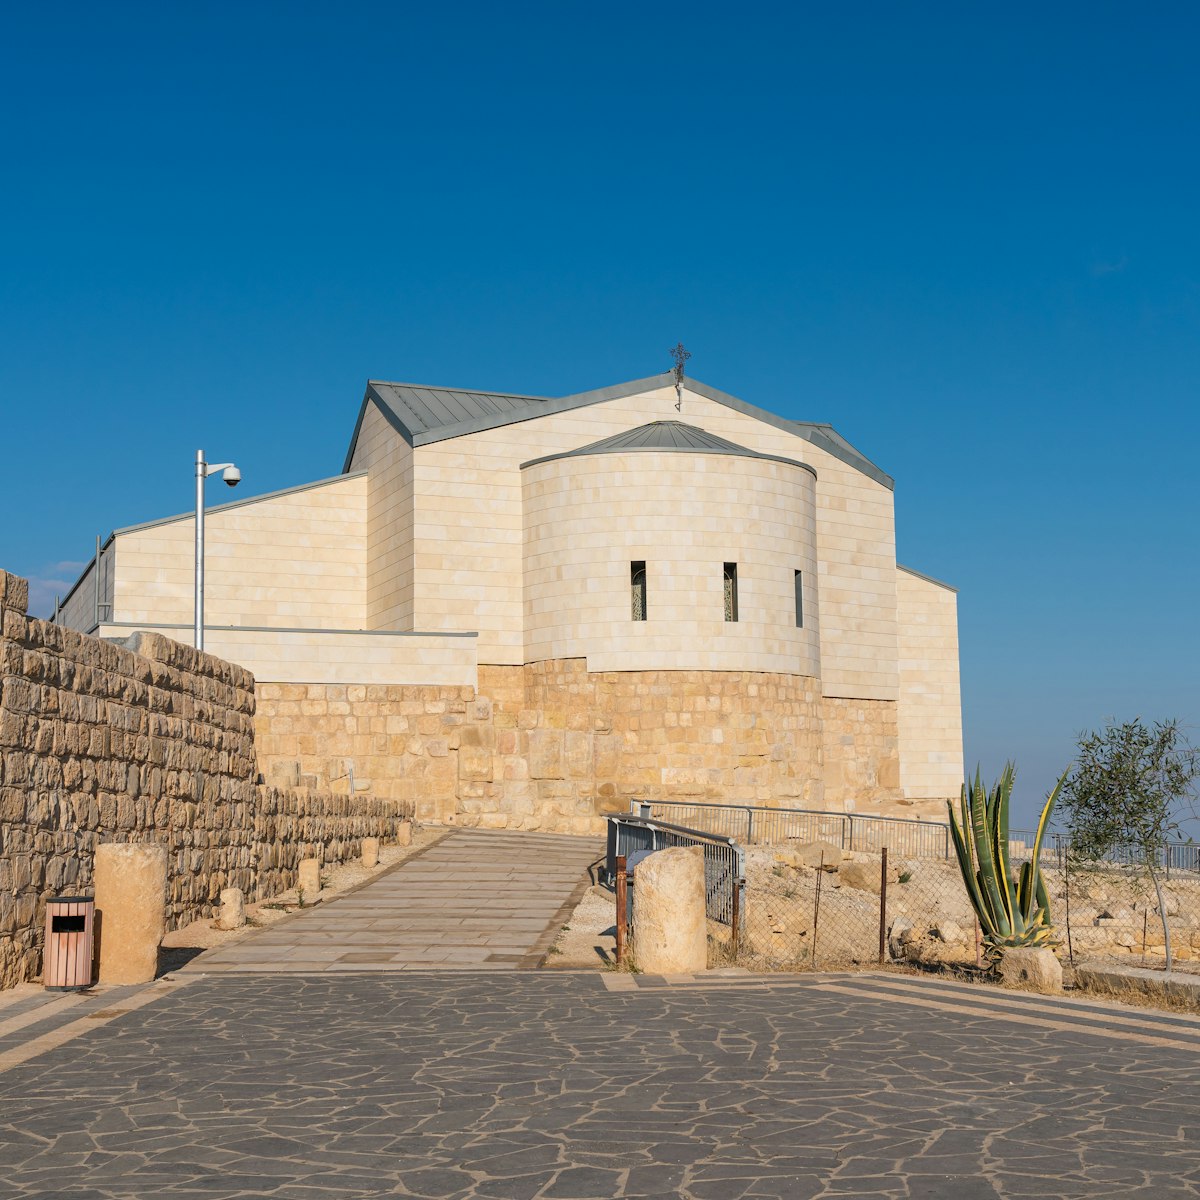 The Memorial church of Moses on top of Mount Nebo, Jordan.